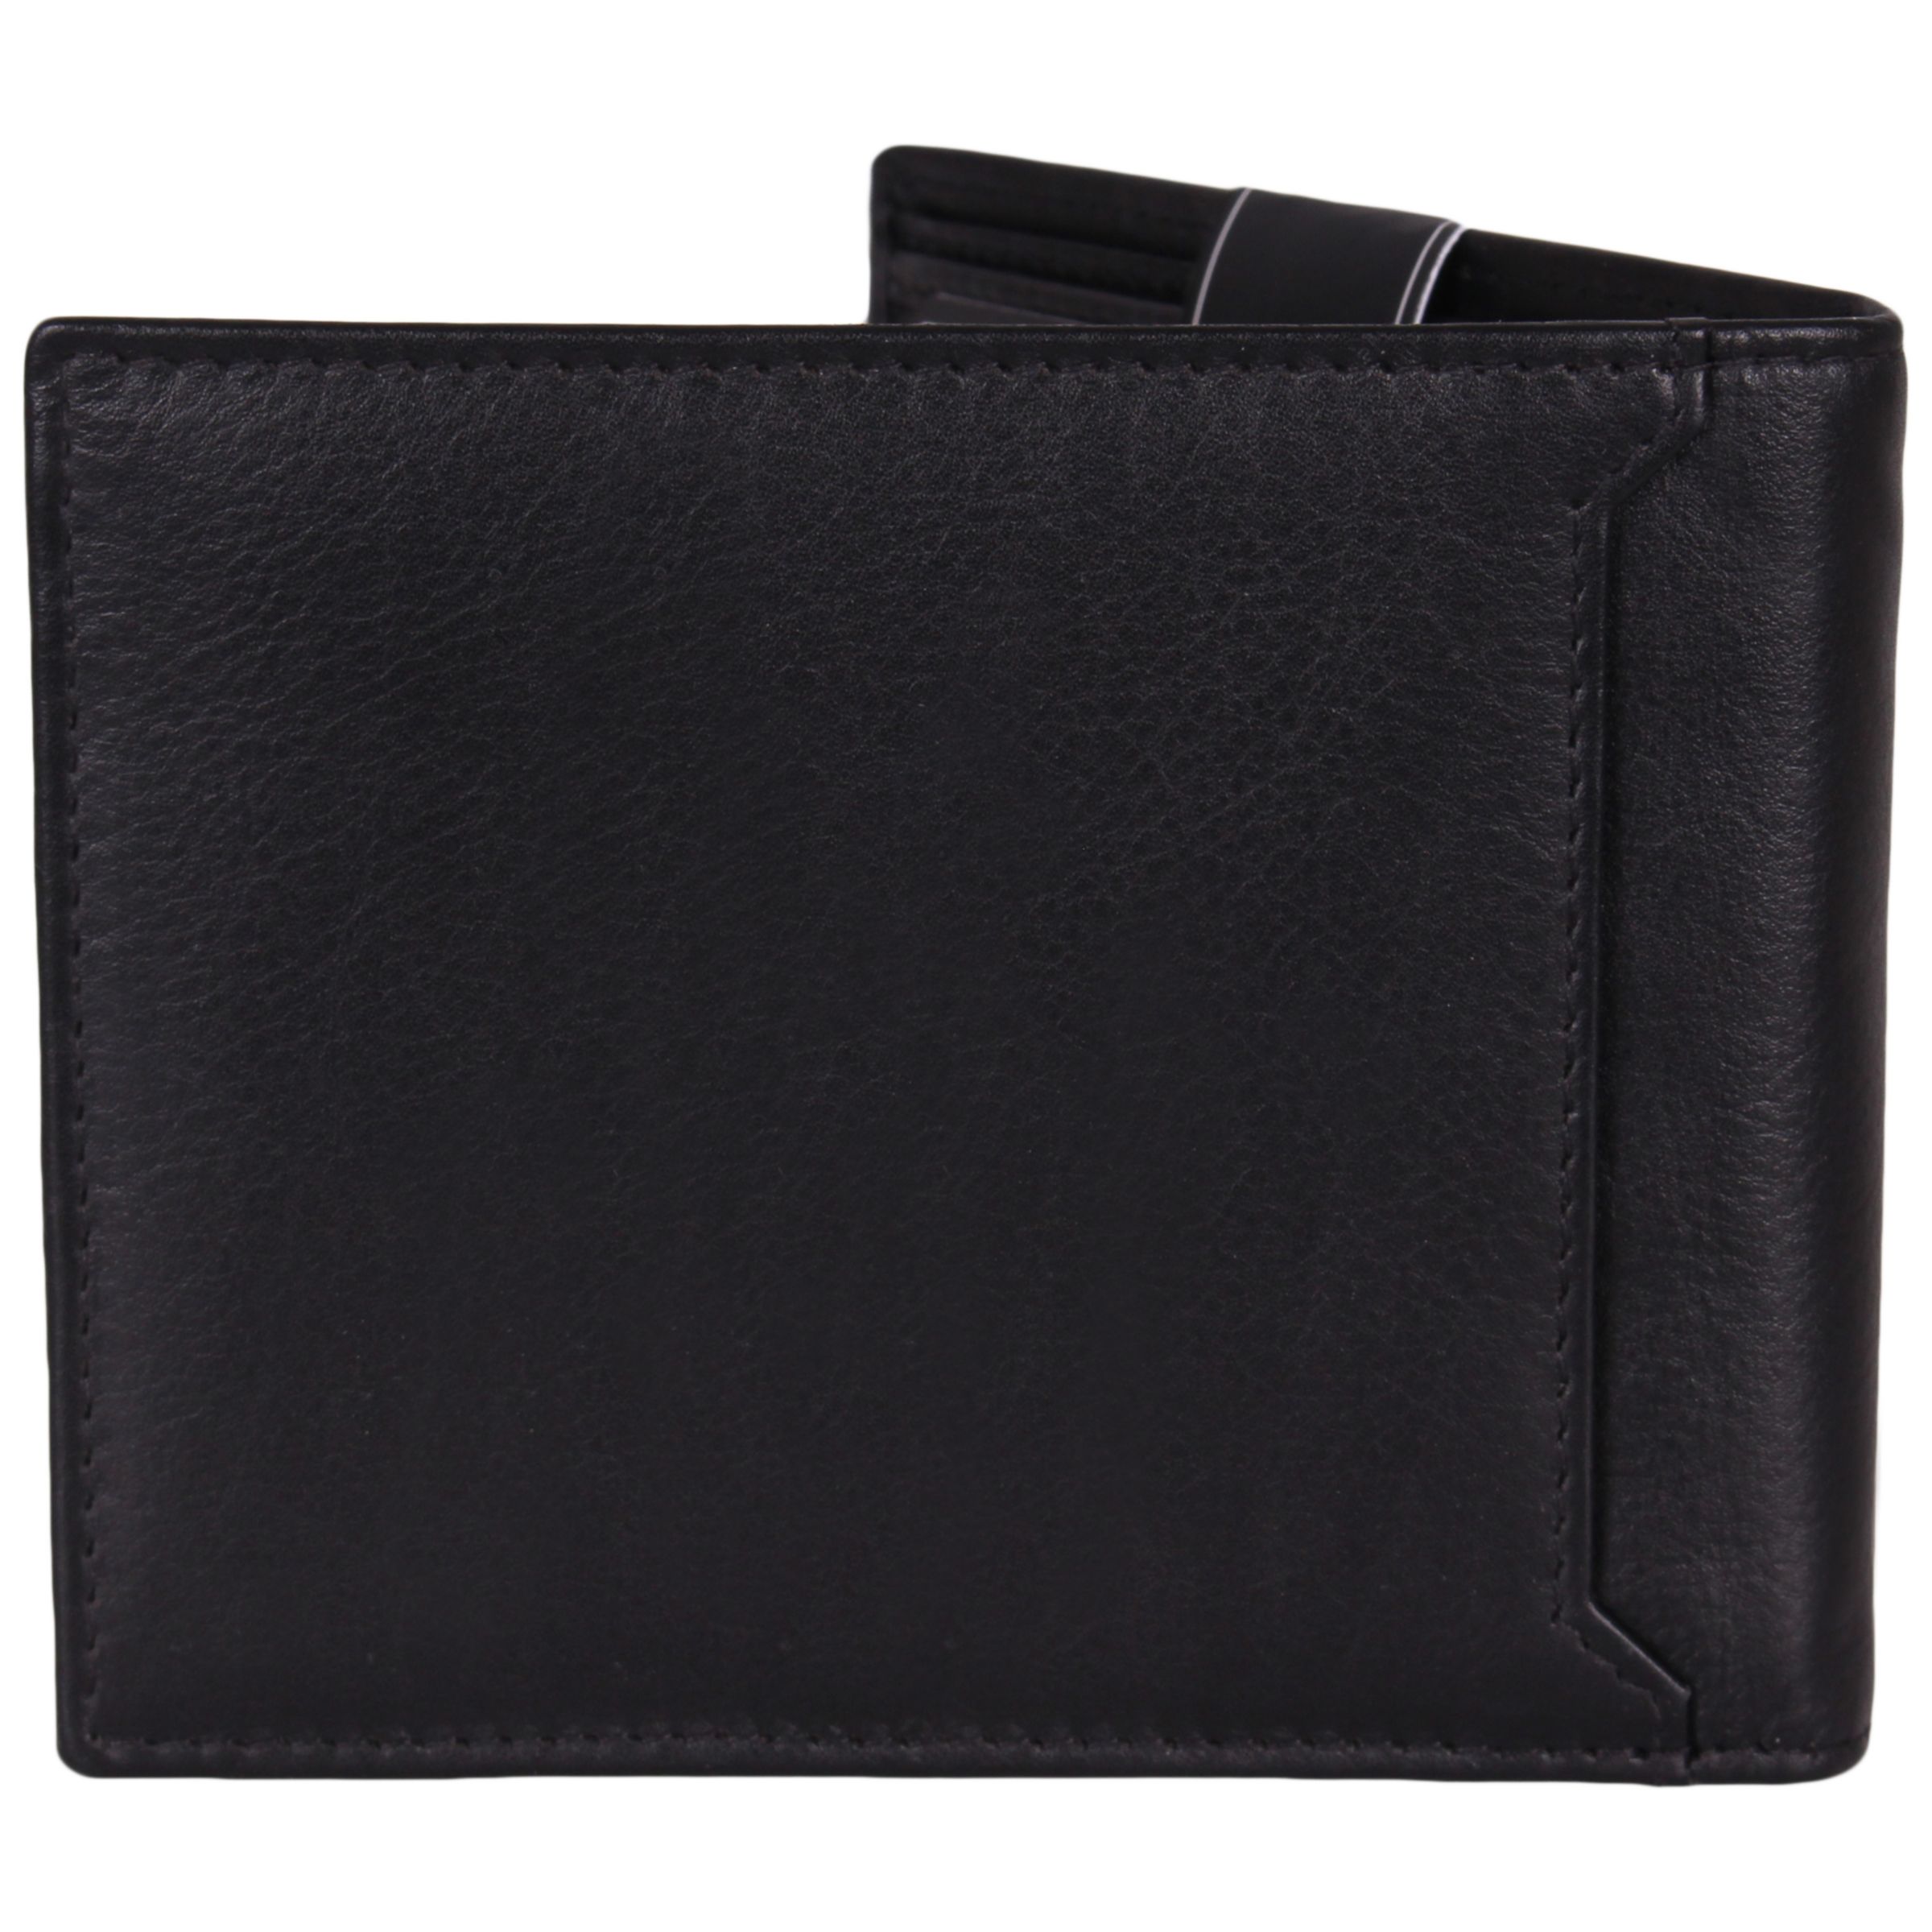 John Lewis & Partners Nappa Leather Bifold Wallet. Black